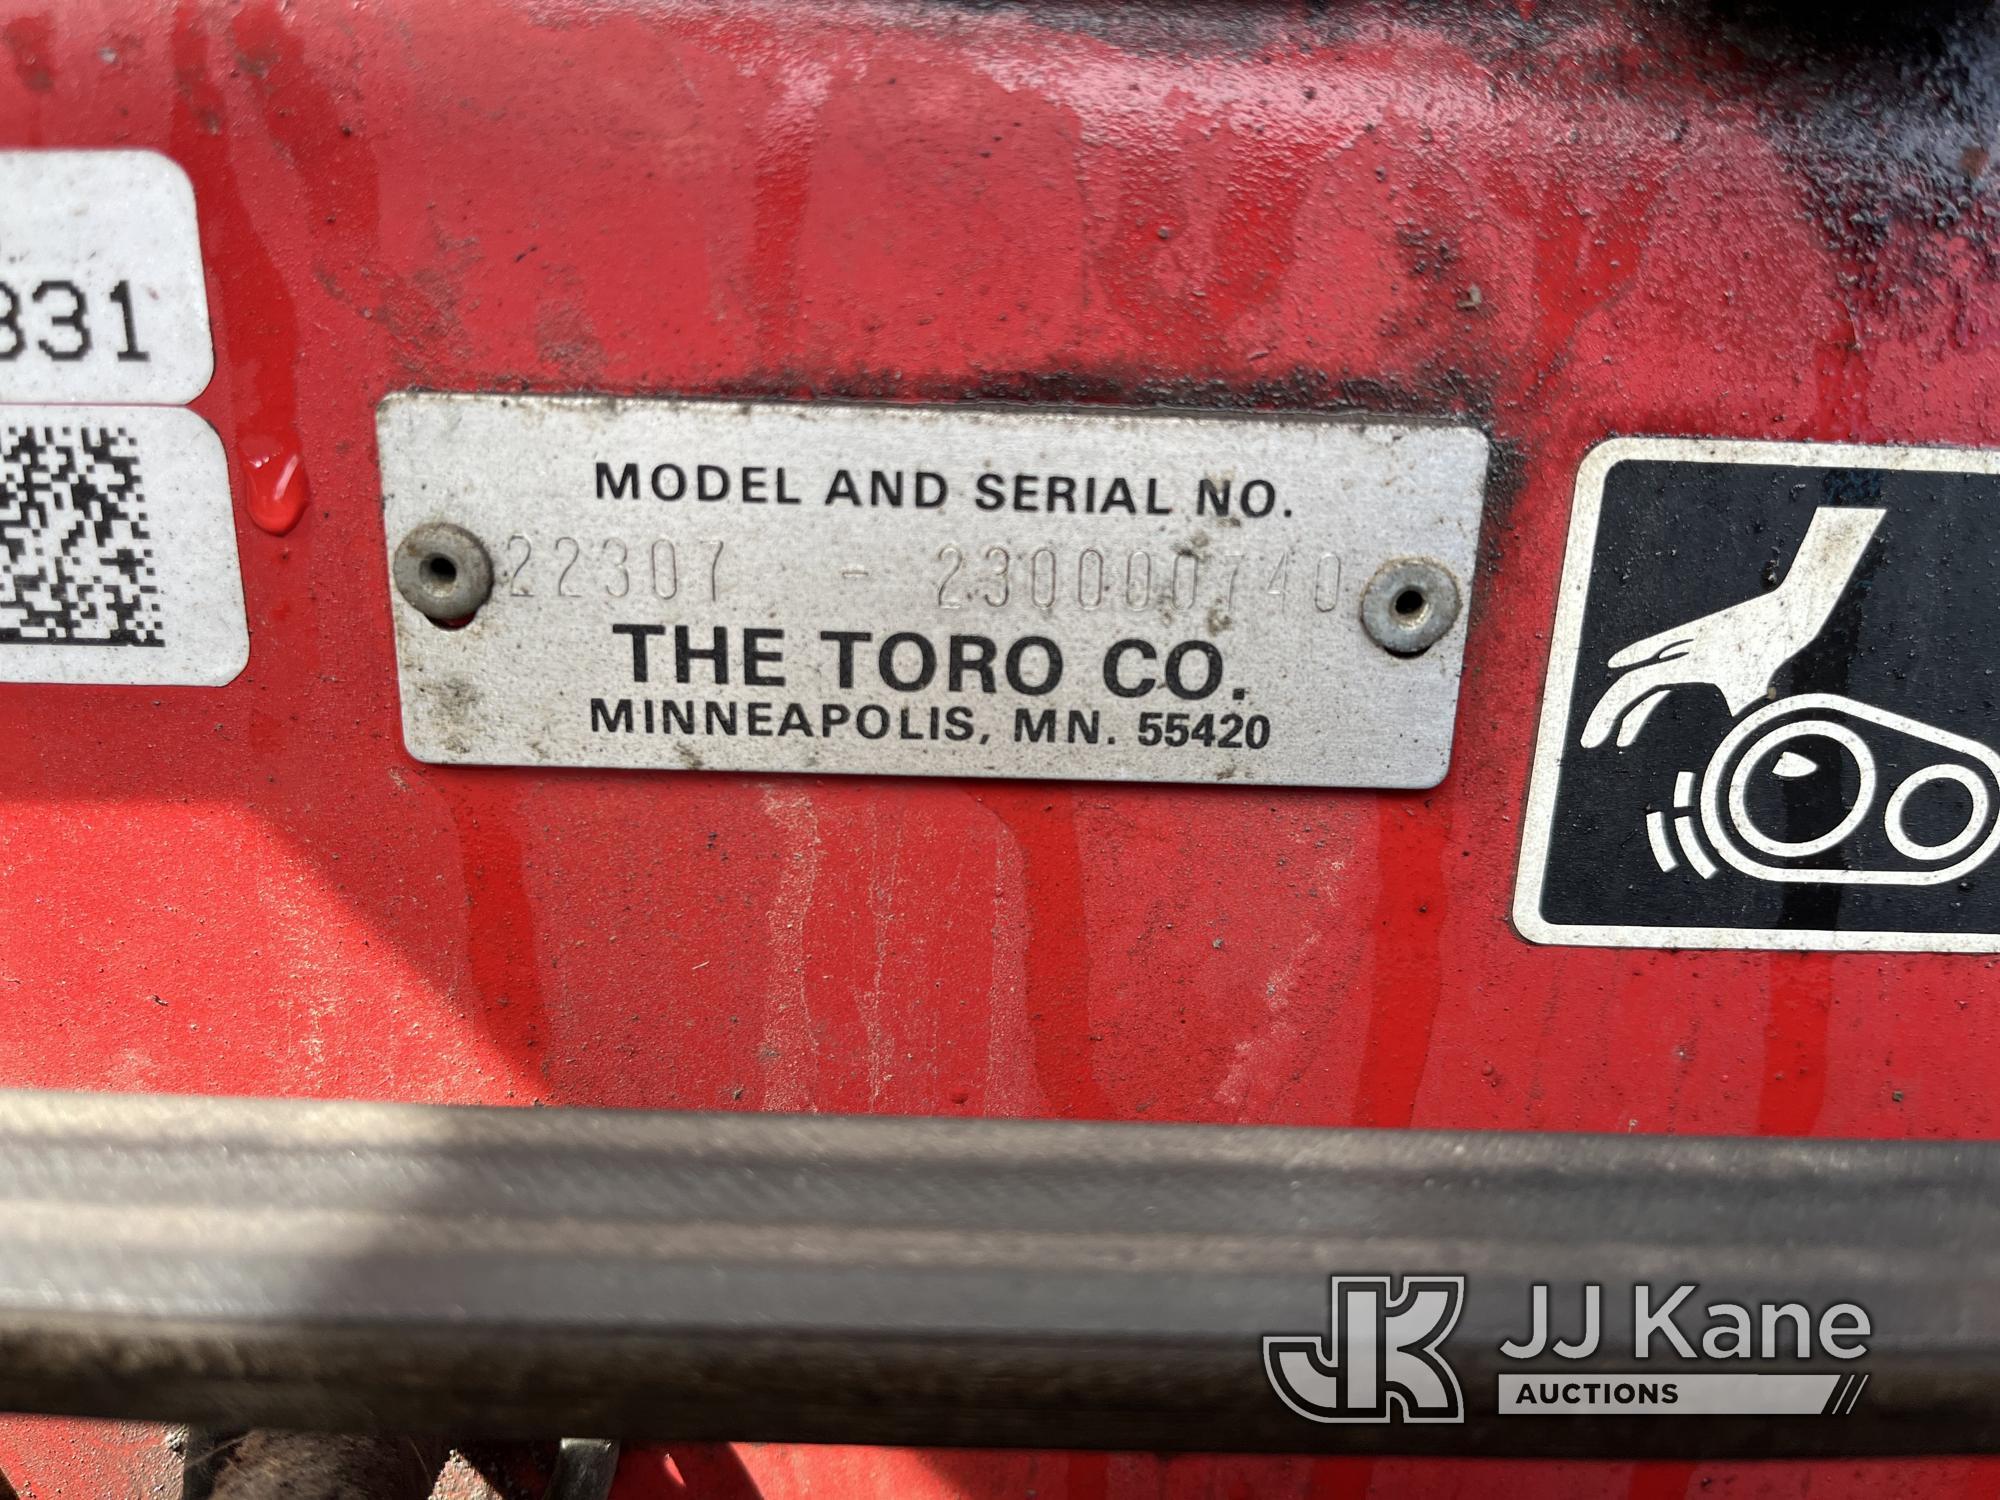 (Smock, PA) Toro Dingo TX-425 Walk-Behind Crawler Skid Steer Loader Runs, Moves & Operates